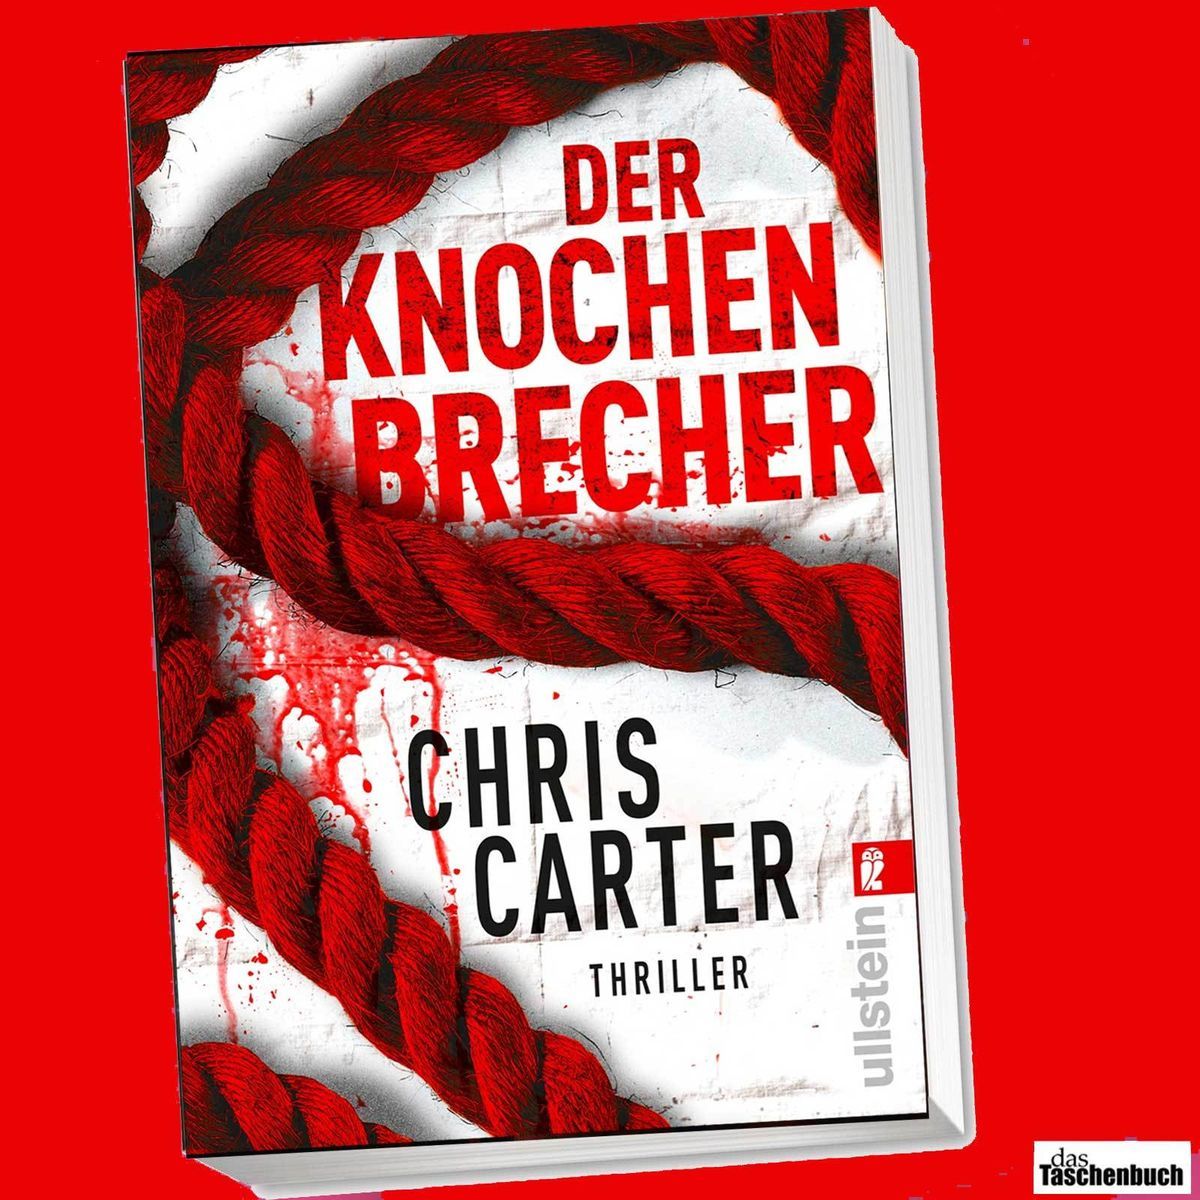 CHRIS CARTER  DER KNOCHENBRECHER  (MAI 2012)  **NEU & KEIN PORTO